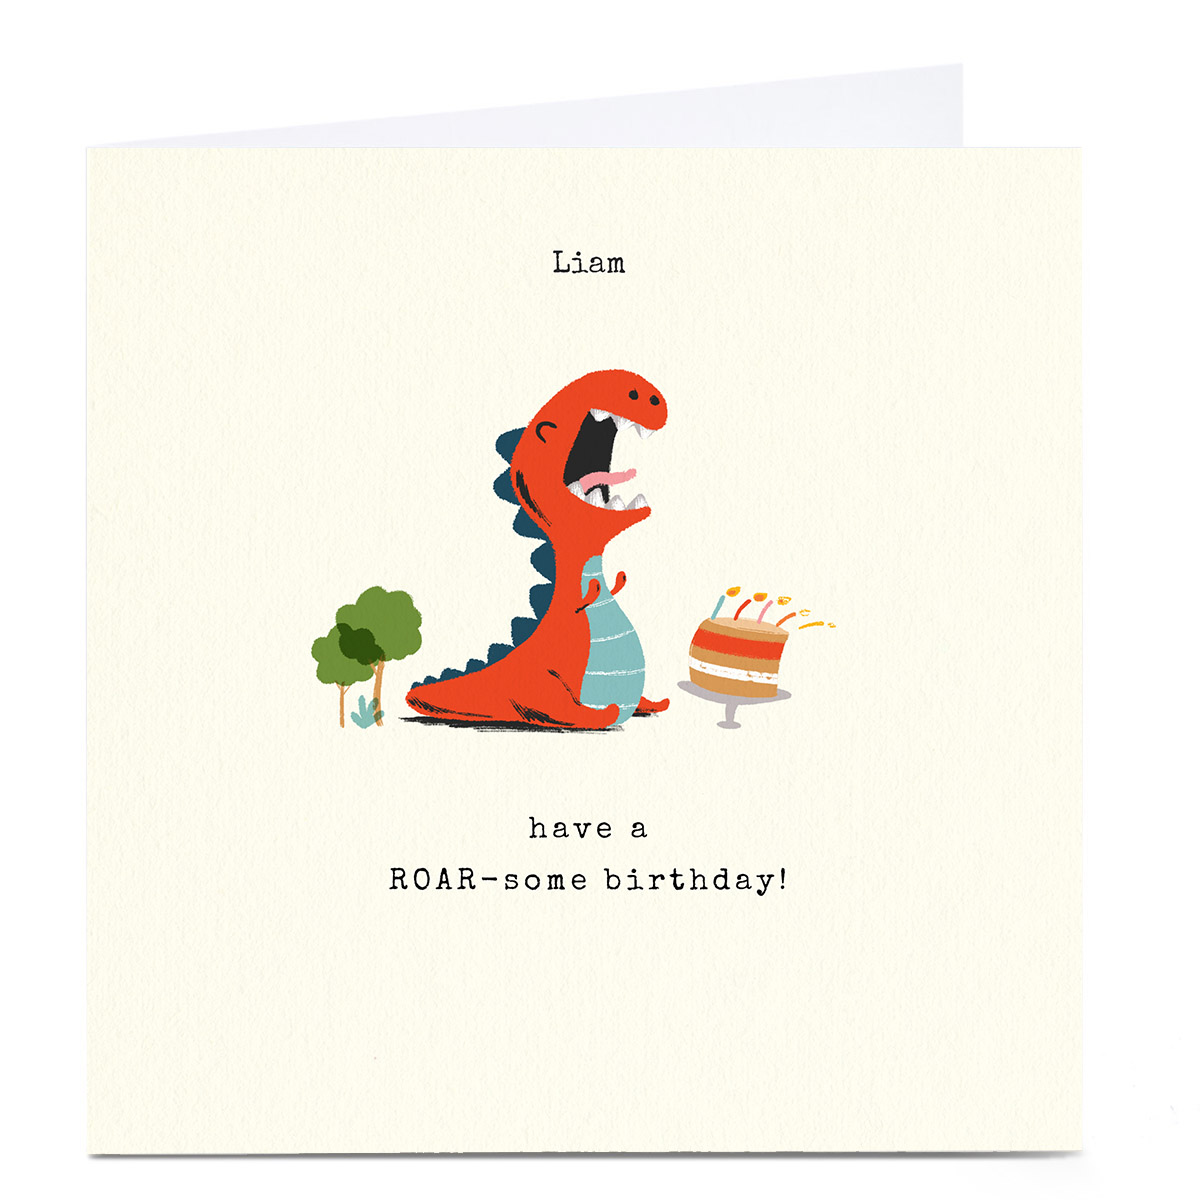 Personalised Andrew Thornton Birthday Card - Roar-some Birthday